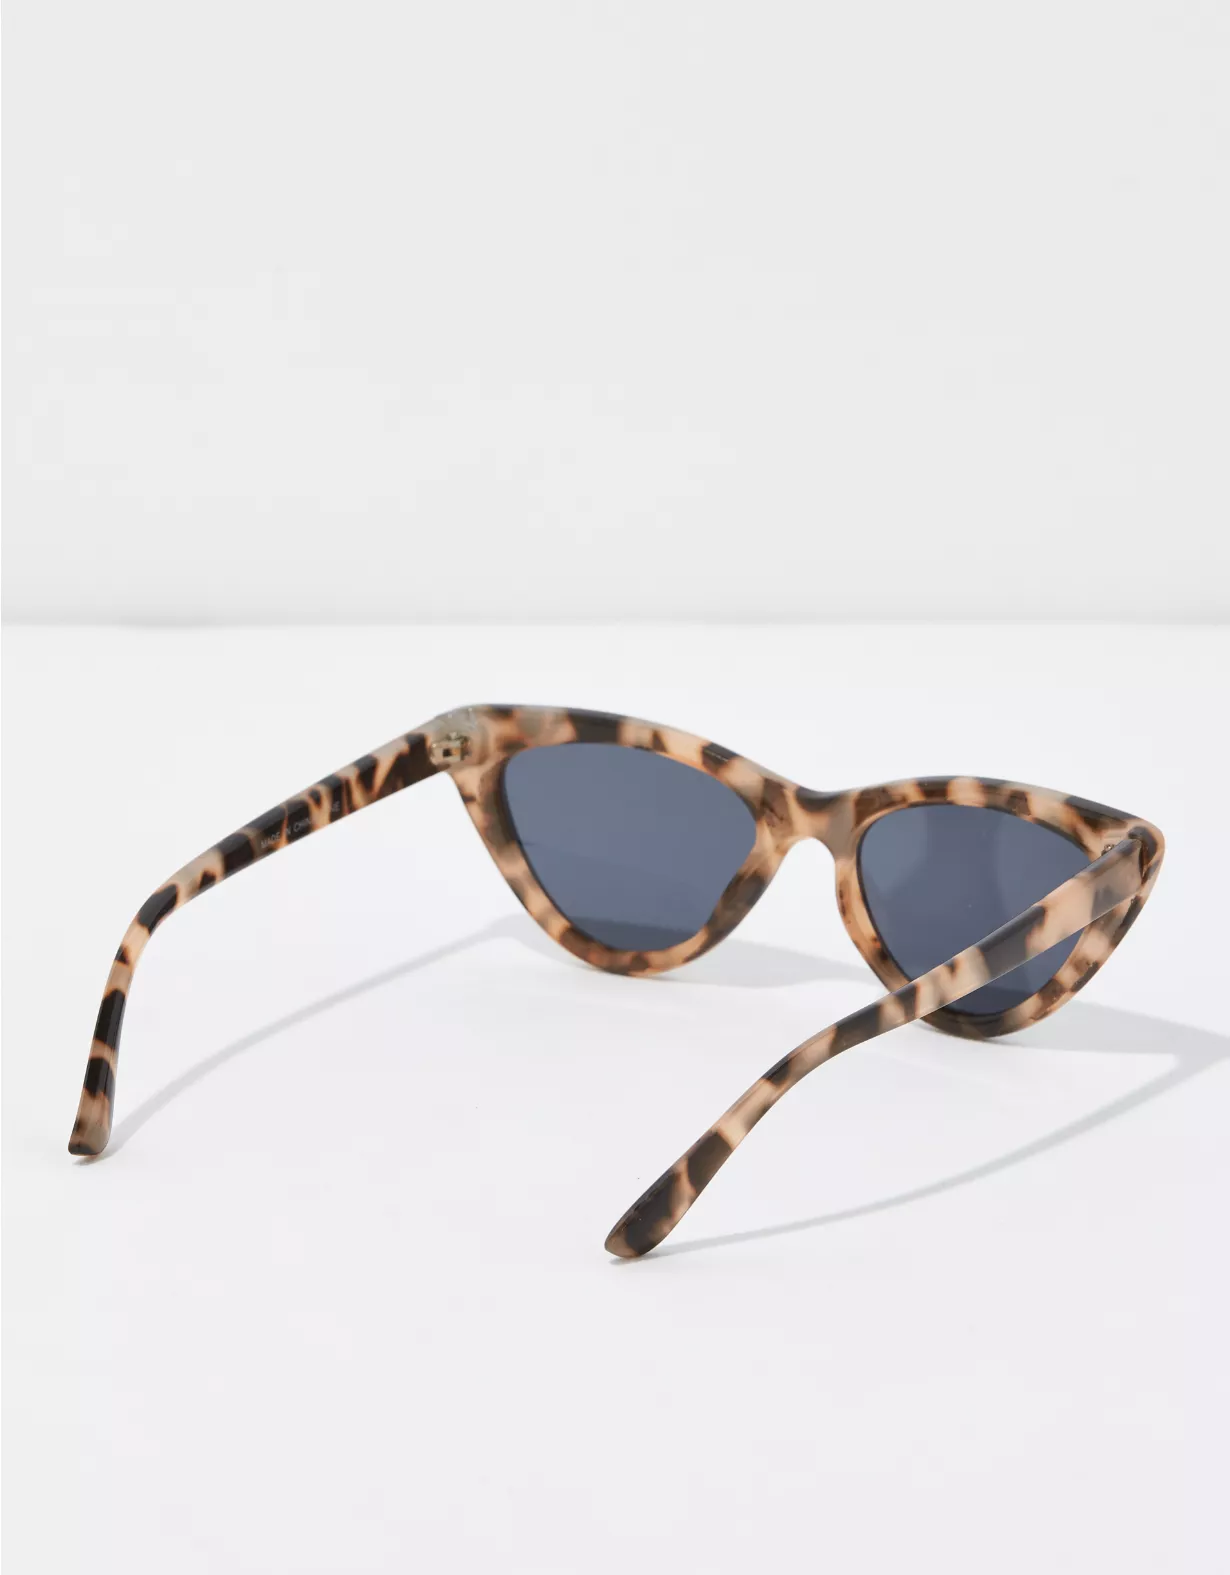 AEO Tortoise Cat Eye Sunglasses